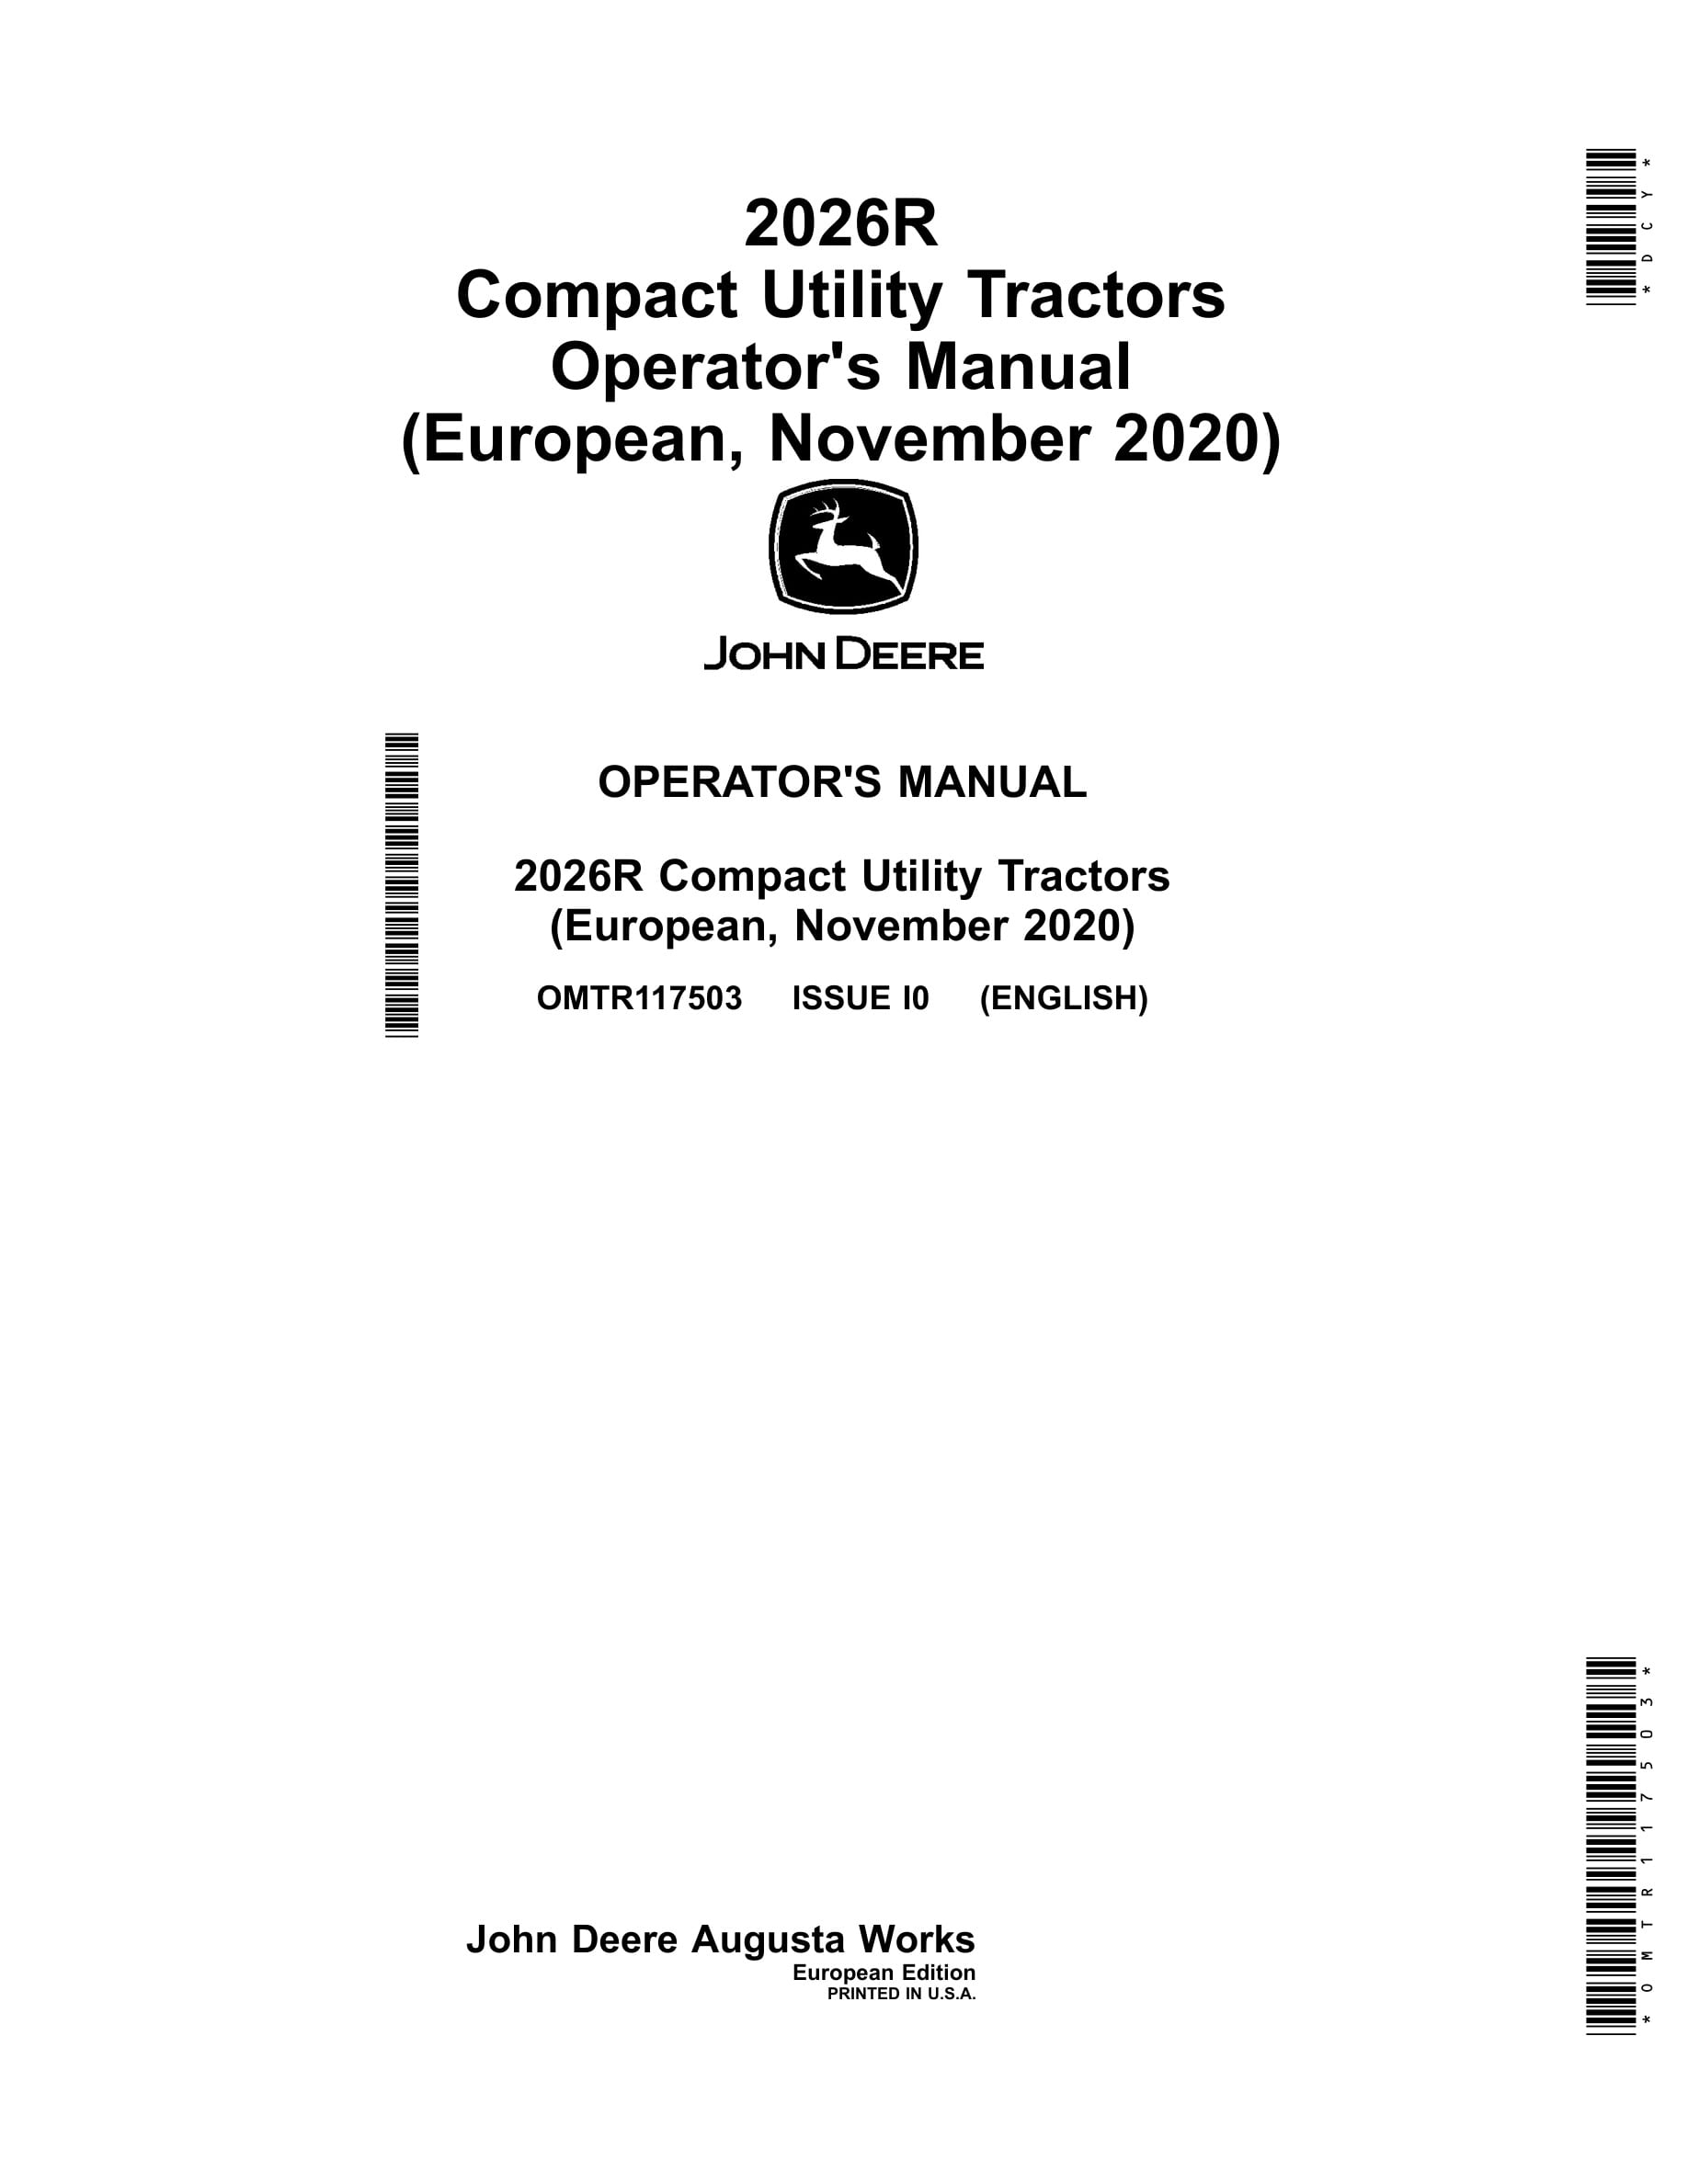 John Deere 2026r Compact Utility Tractors Operator Manuals OMTR117503-1